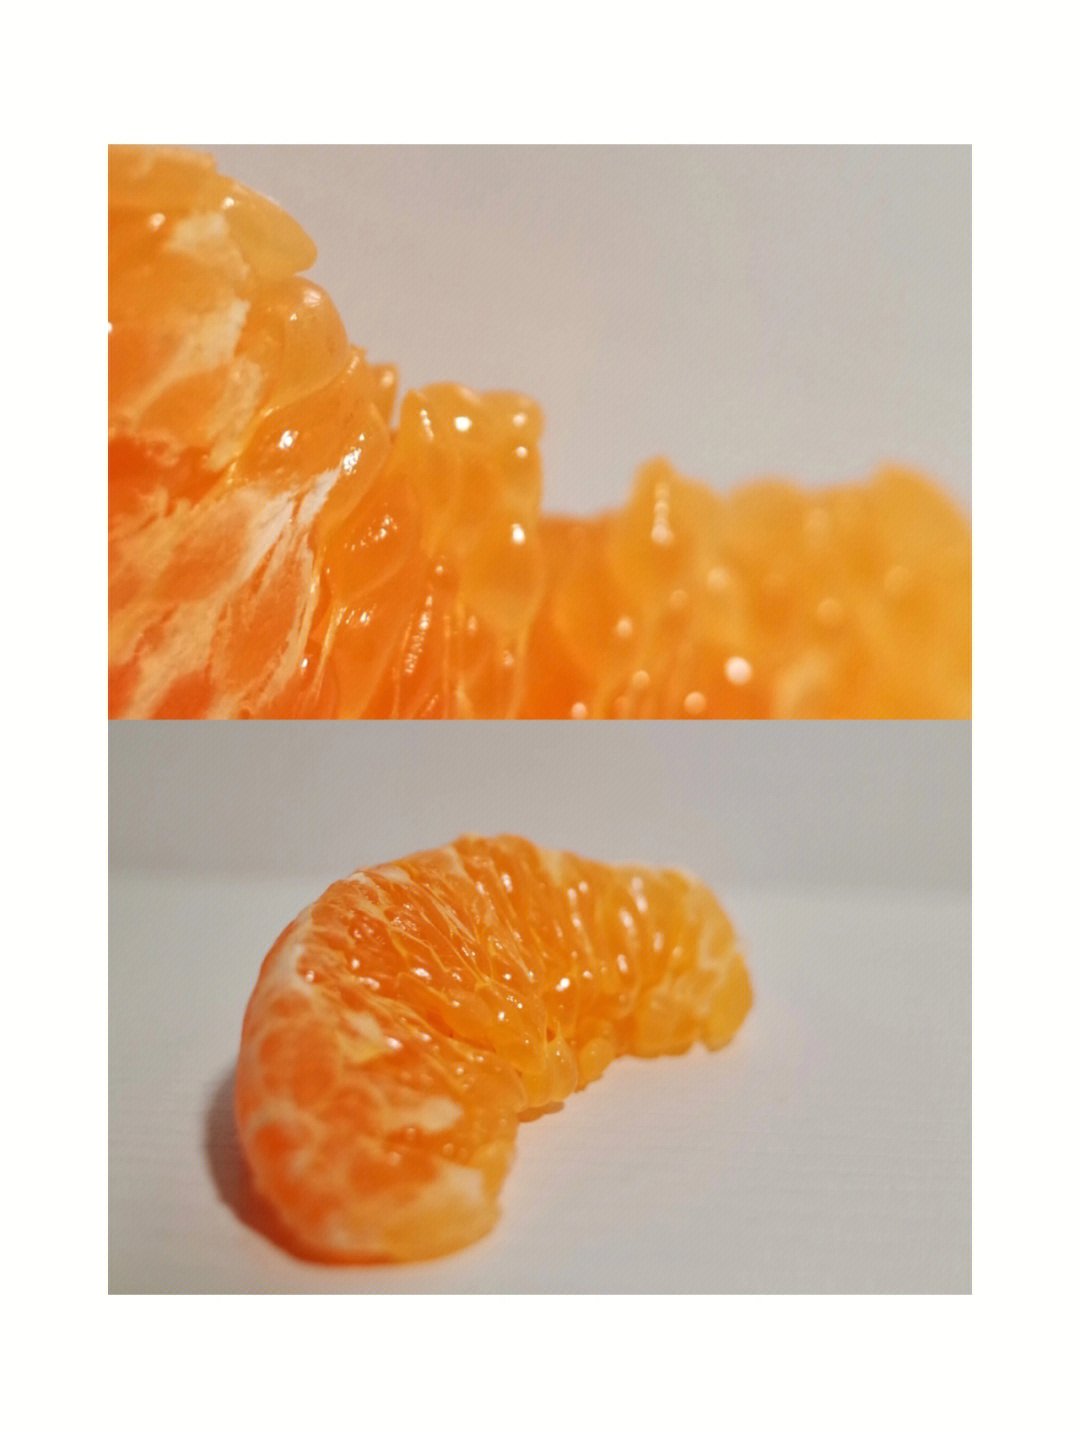 拍个橘子